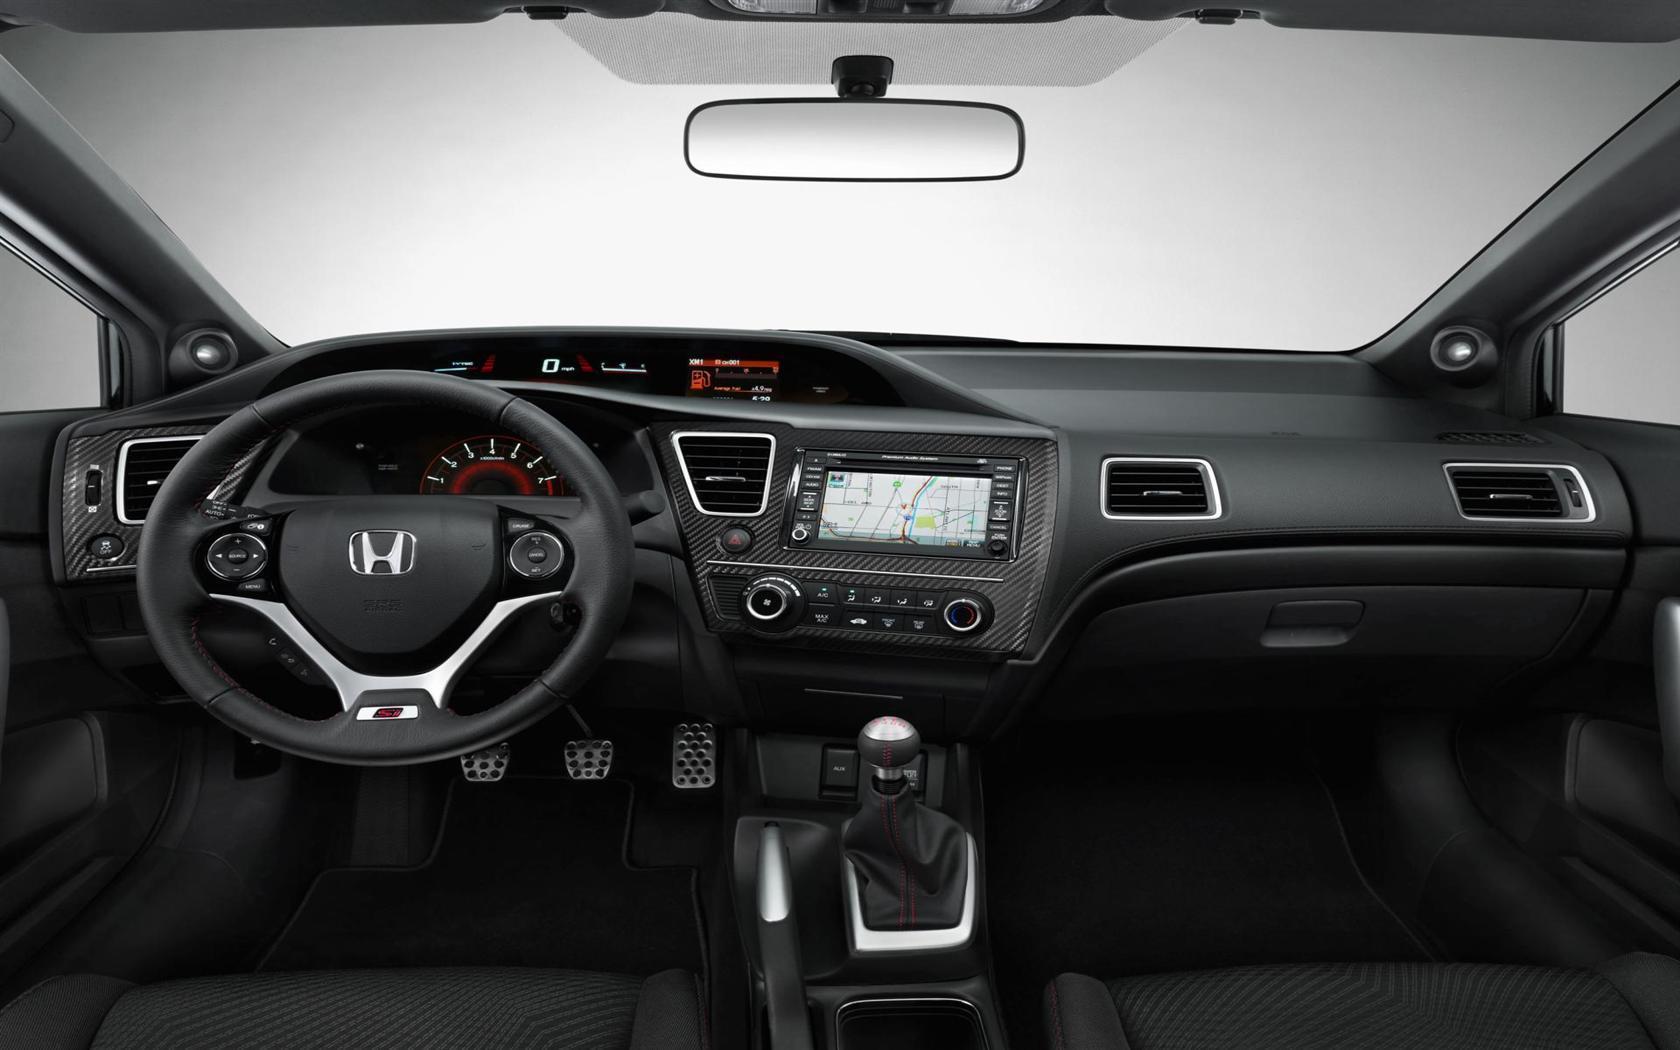 Honda Civic Si Image. Photo: 2013 Honda Civic Si Image I0021